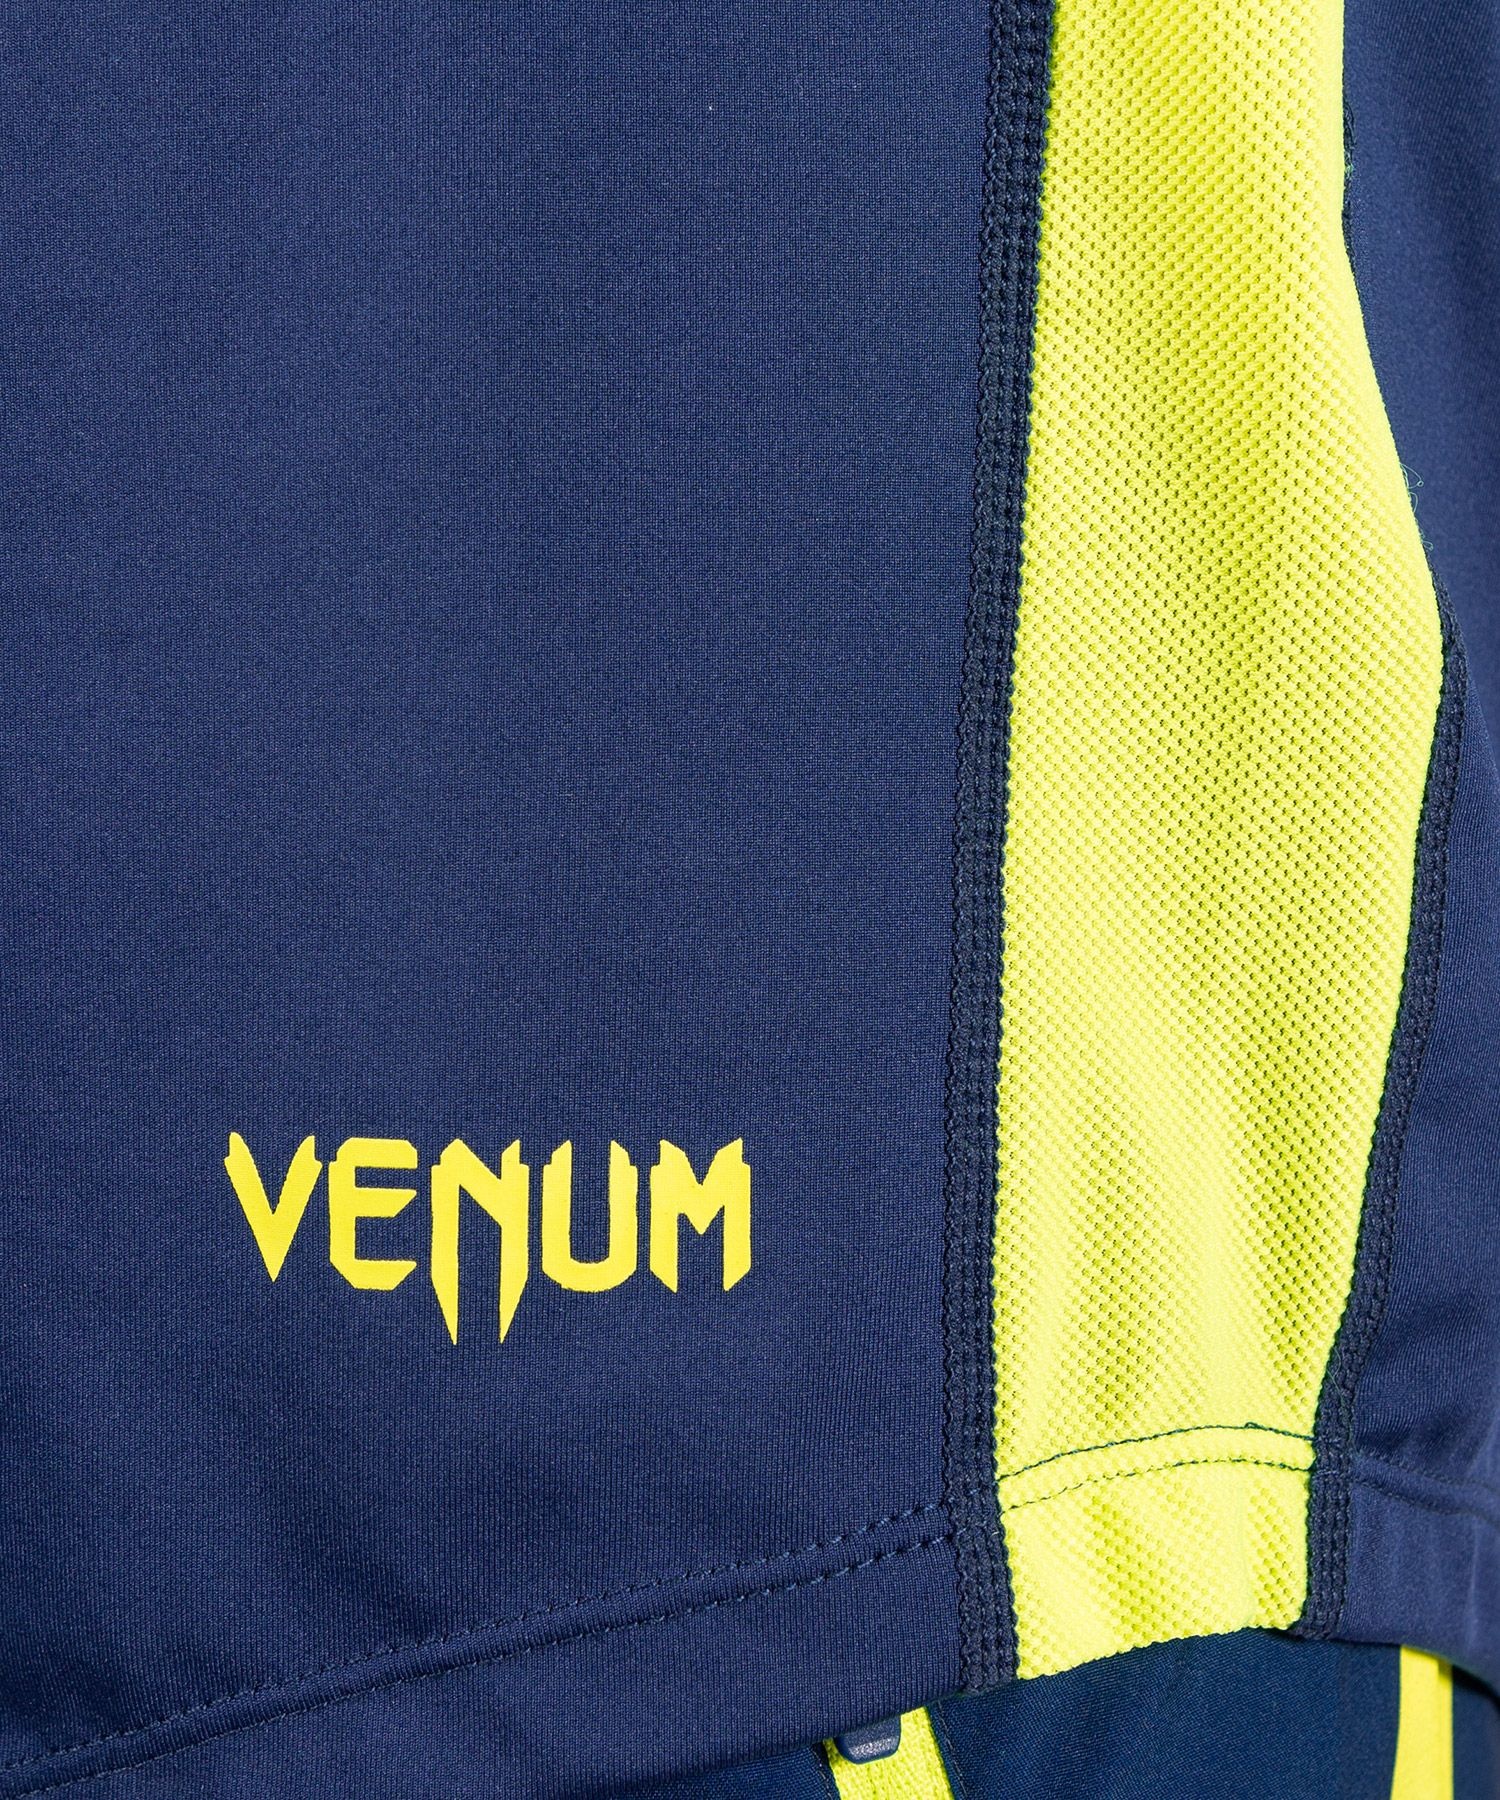 VENUM Venum ORIGINS - Tee-shirt Homme blue/yellow - Private Sport Shop